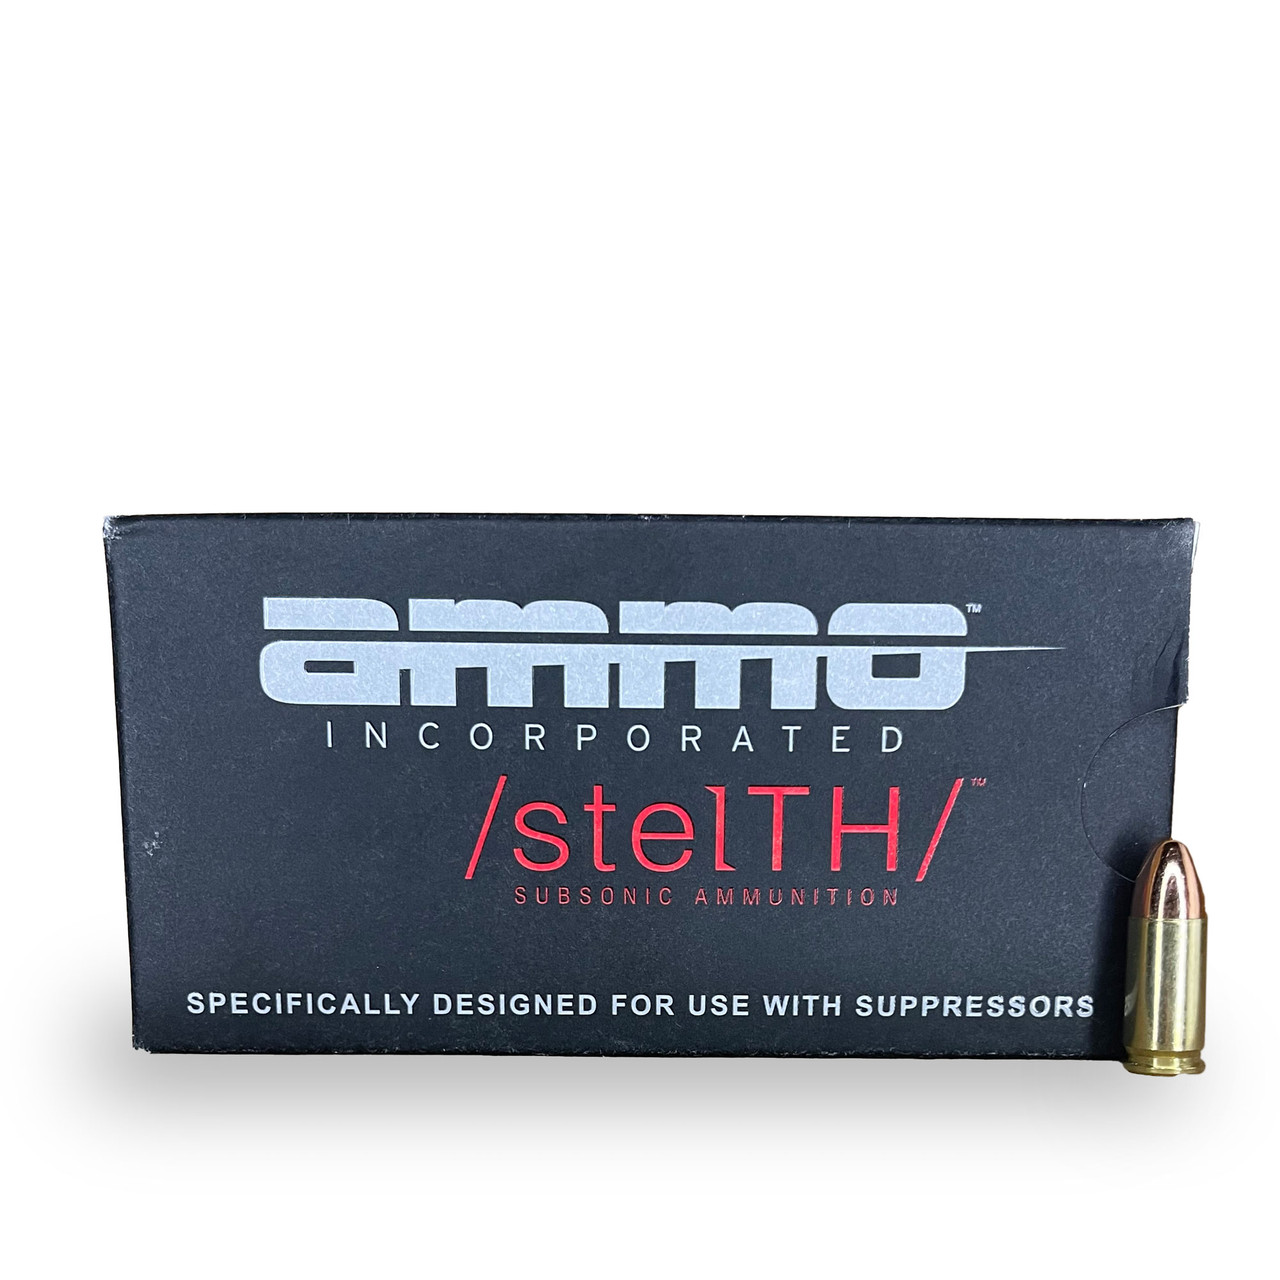 9MM 165GR TMC AMMO INC Stelth  (50 rounds)